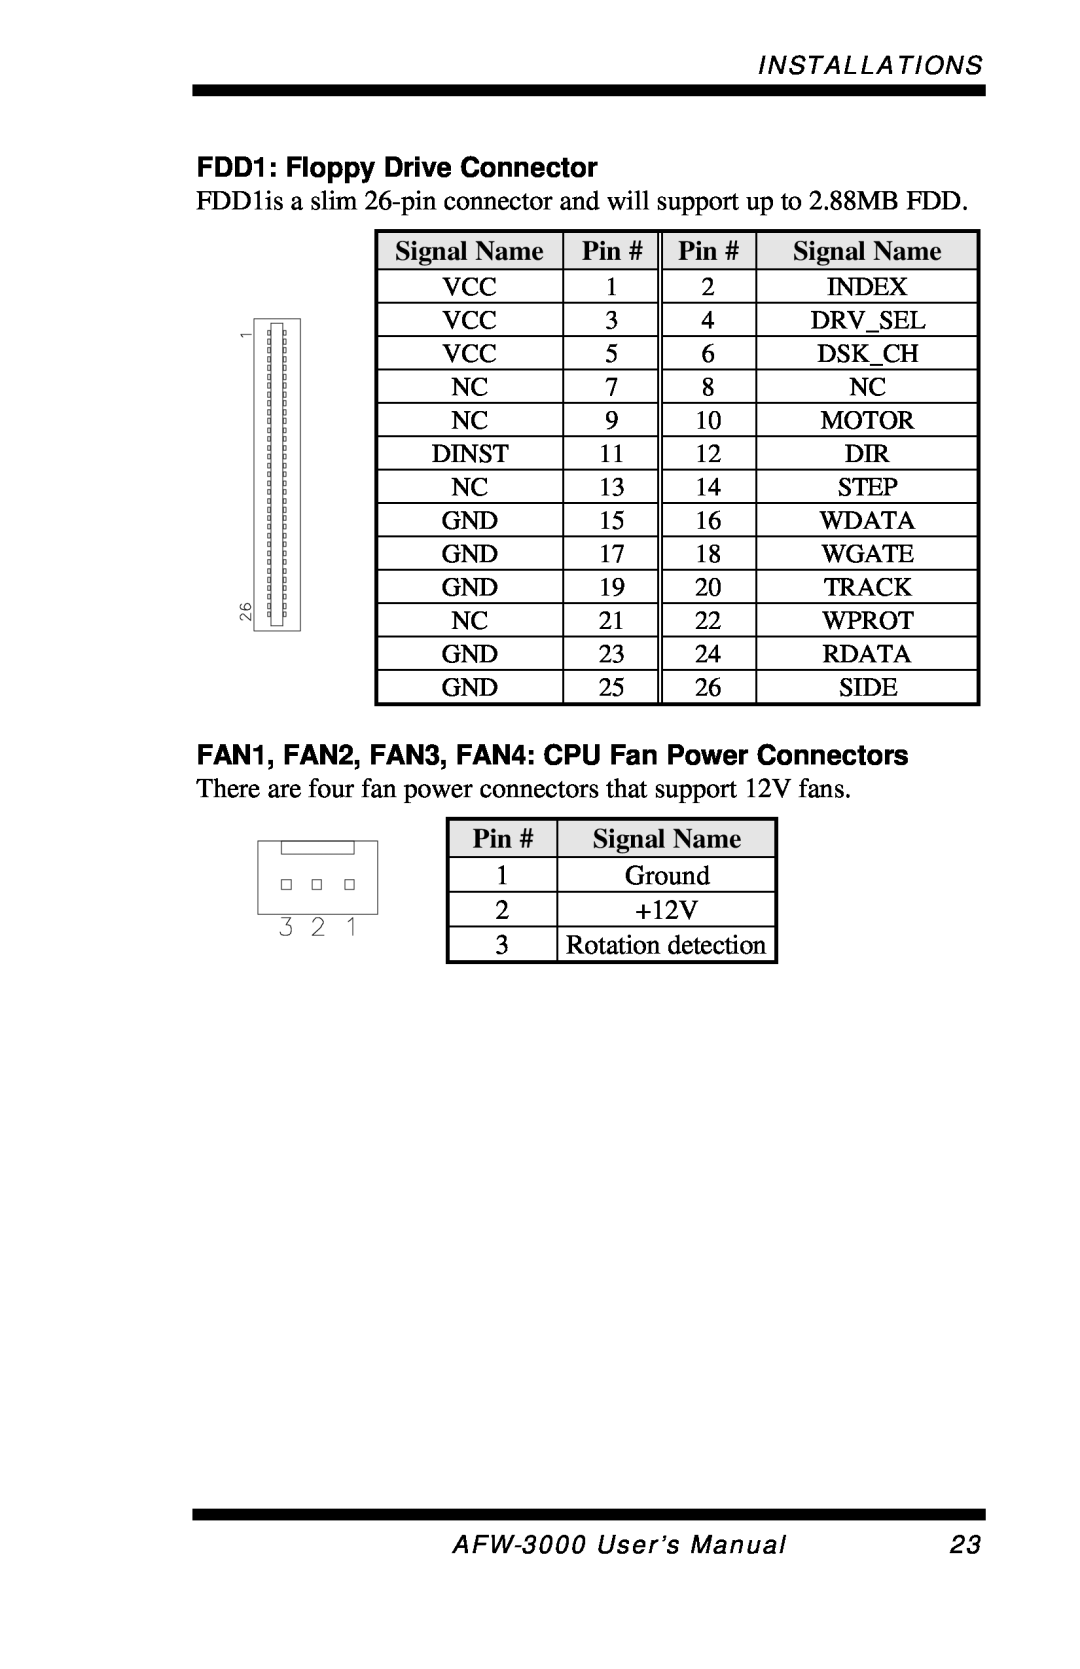 Intel E7501 user manual FDD1 Floppy Drive Connector, FAN1, FAN2, FAN3, FAN4 CPU Fan Power Connectors, Signal Name, Pin # 